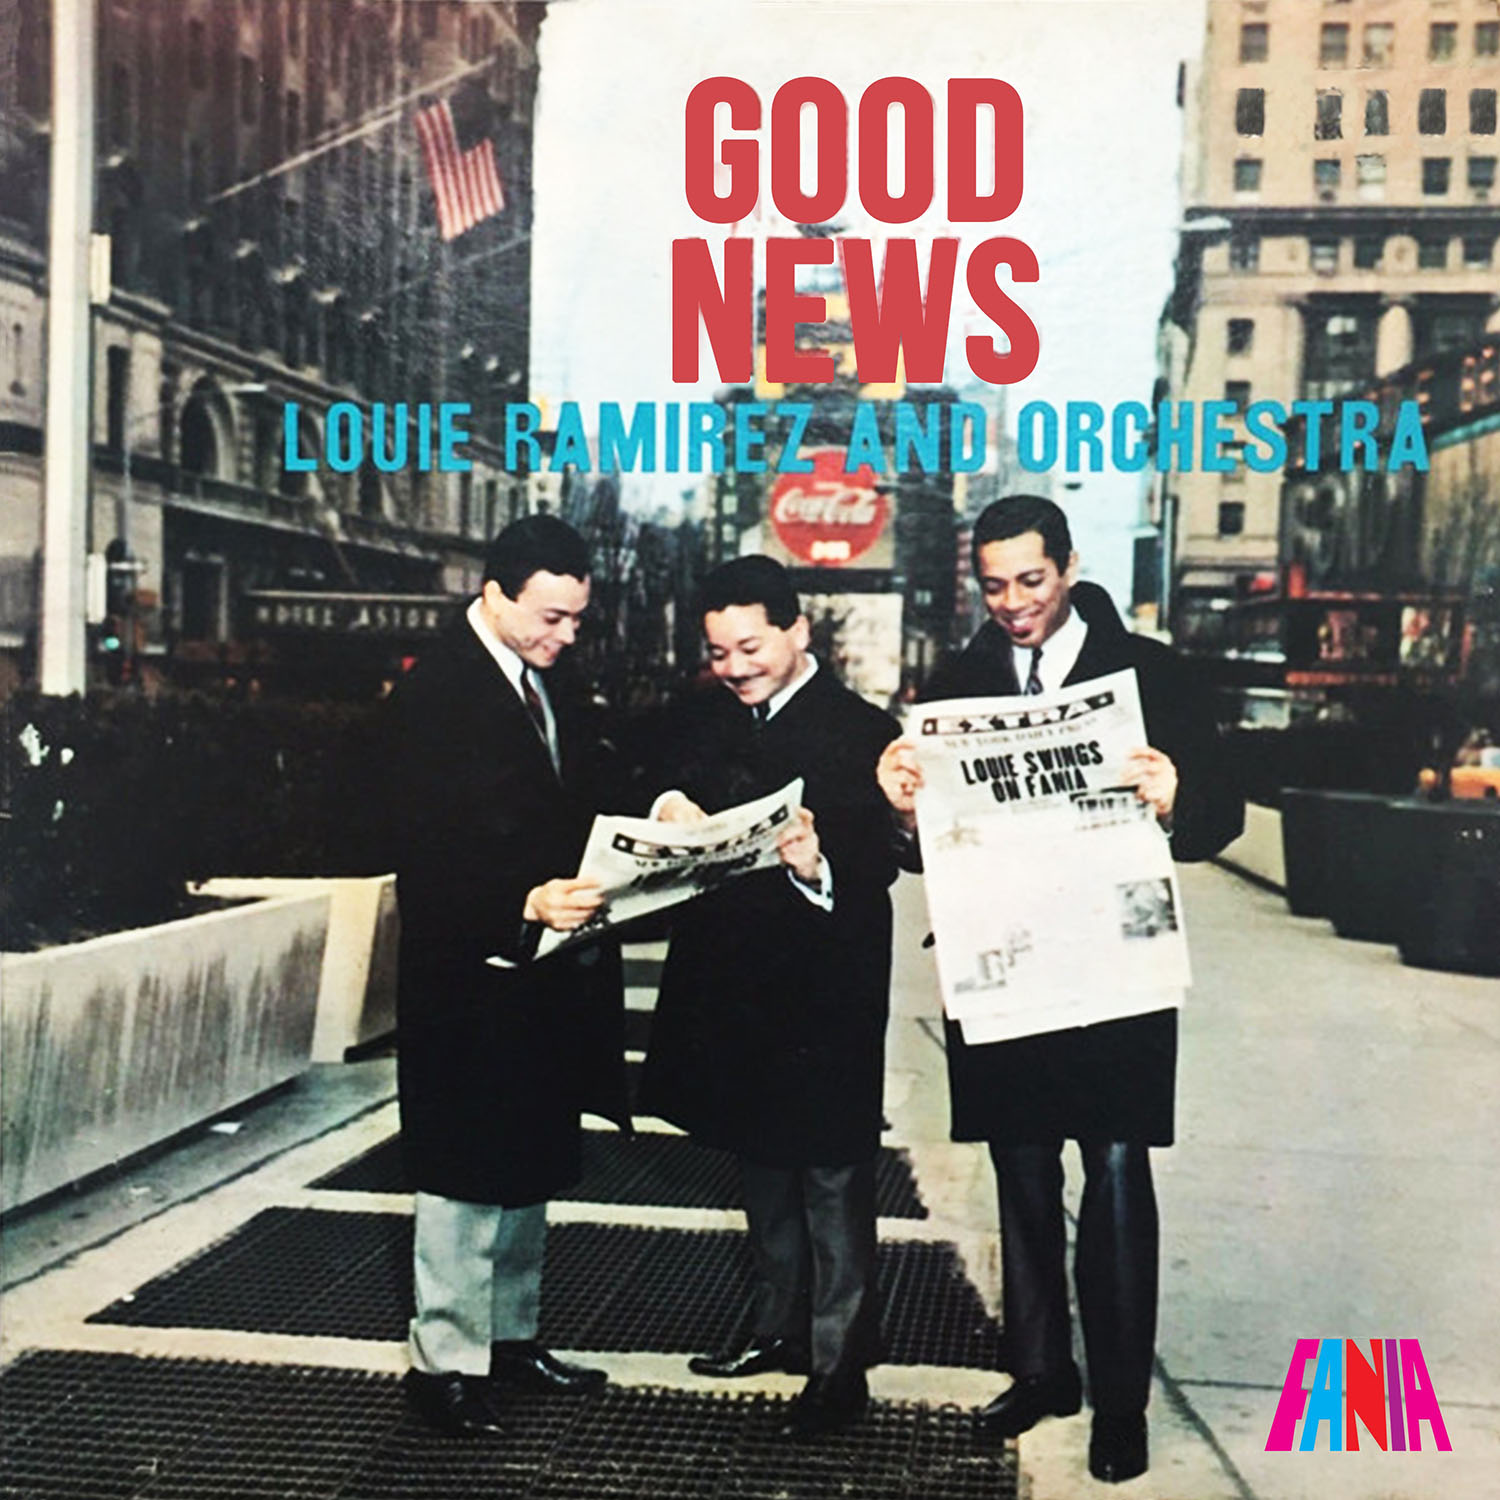 Louie Ramirez and Orchestra - Good News album cover